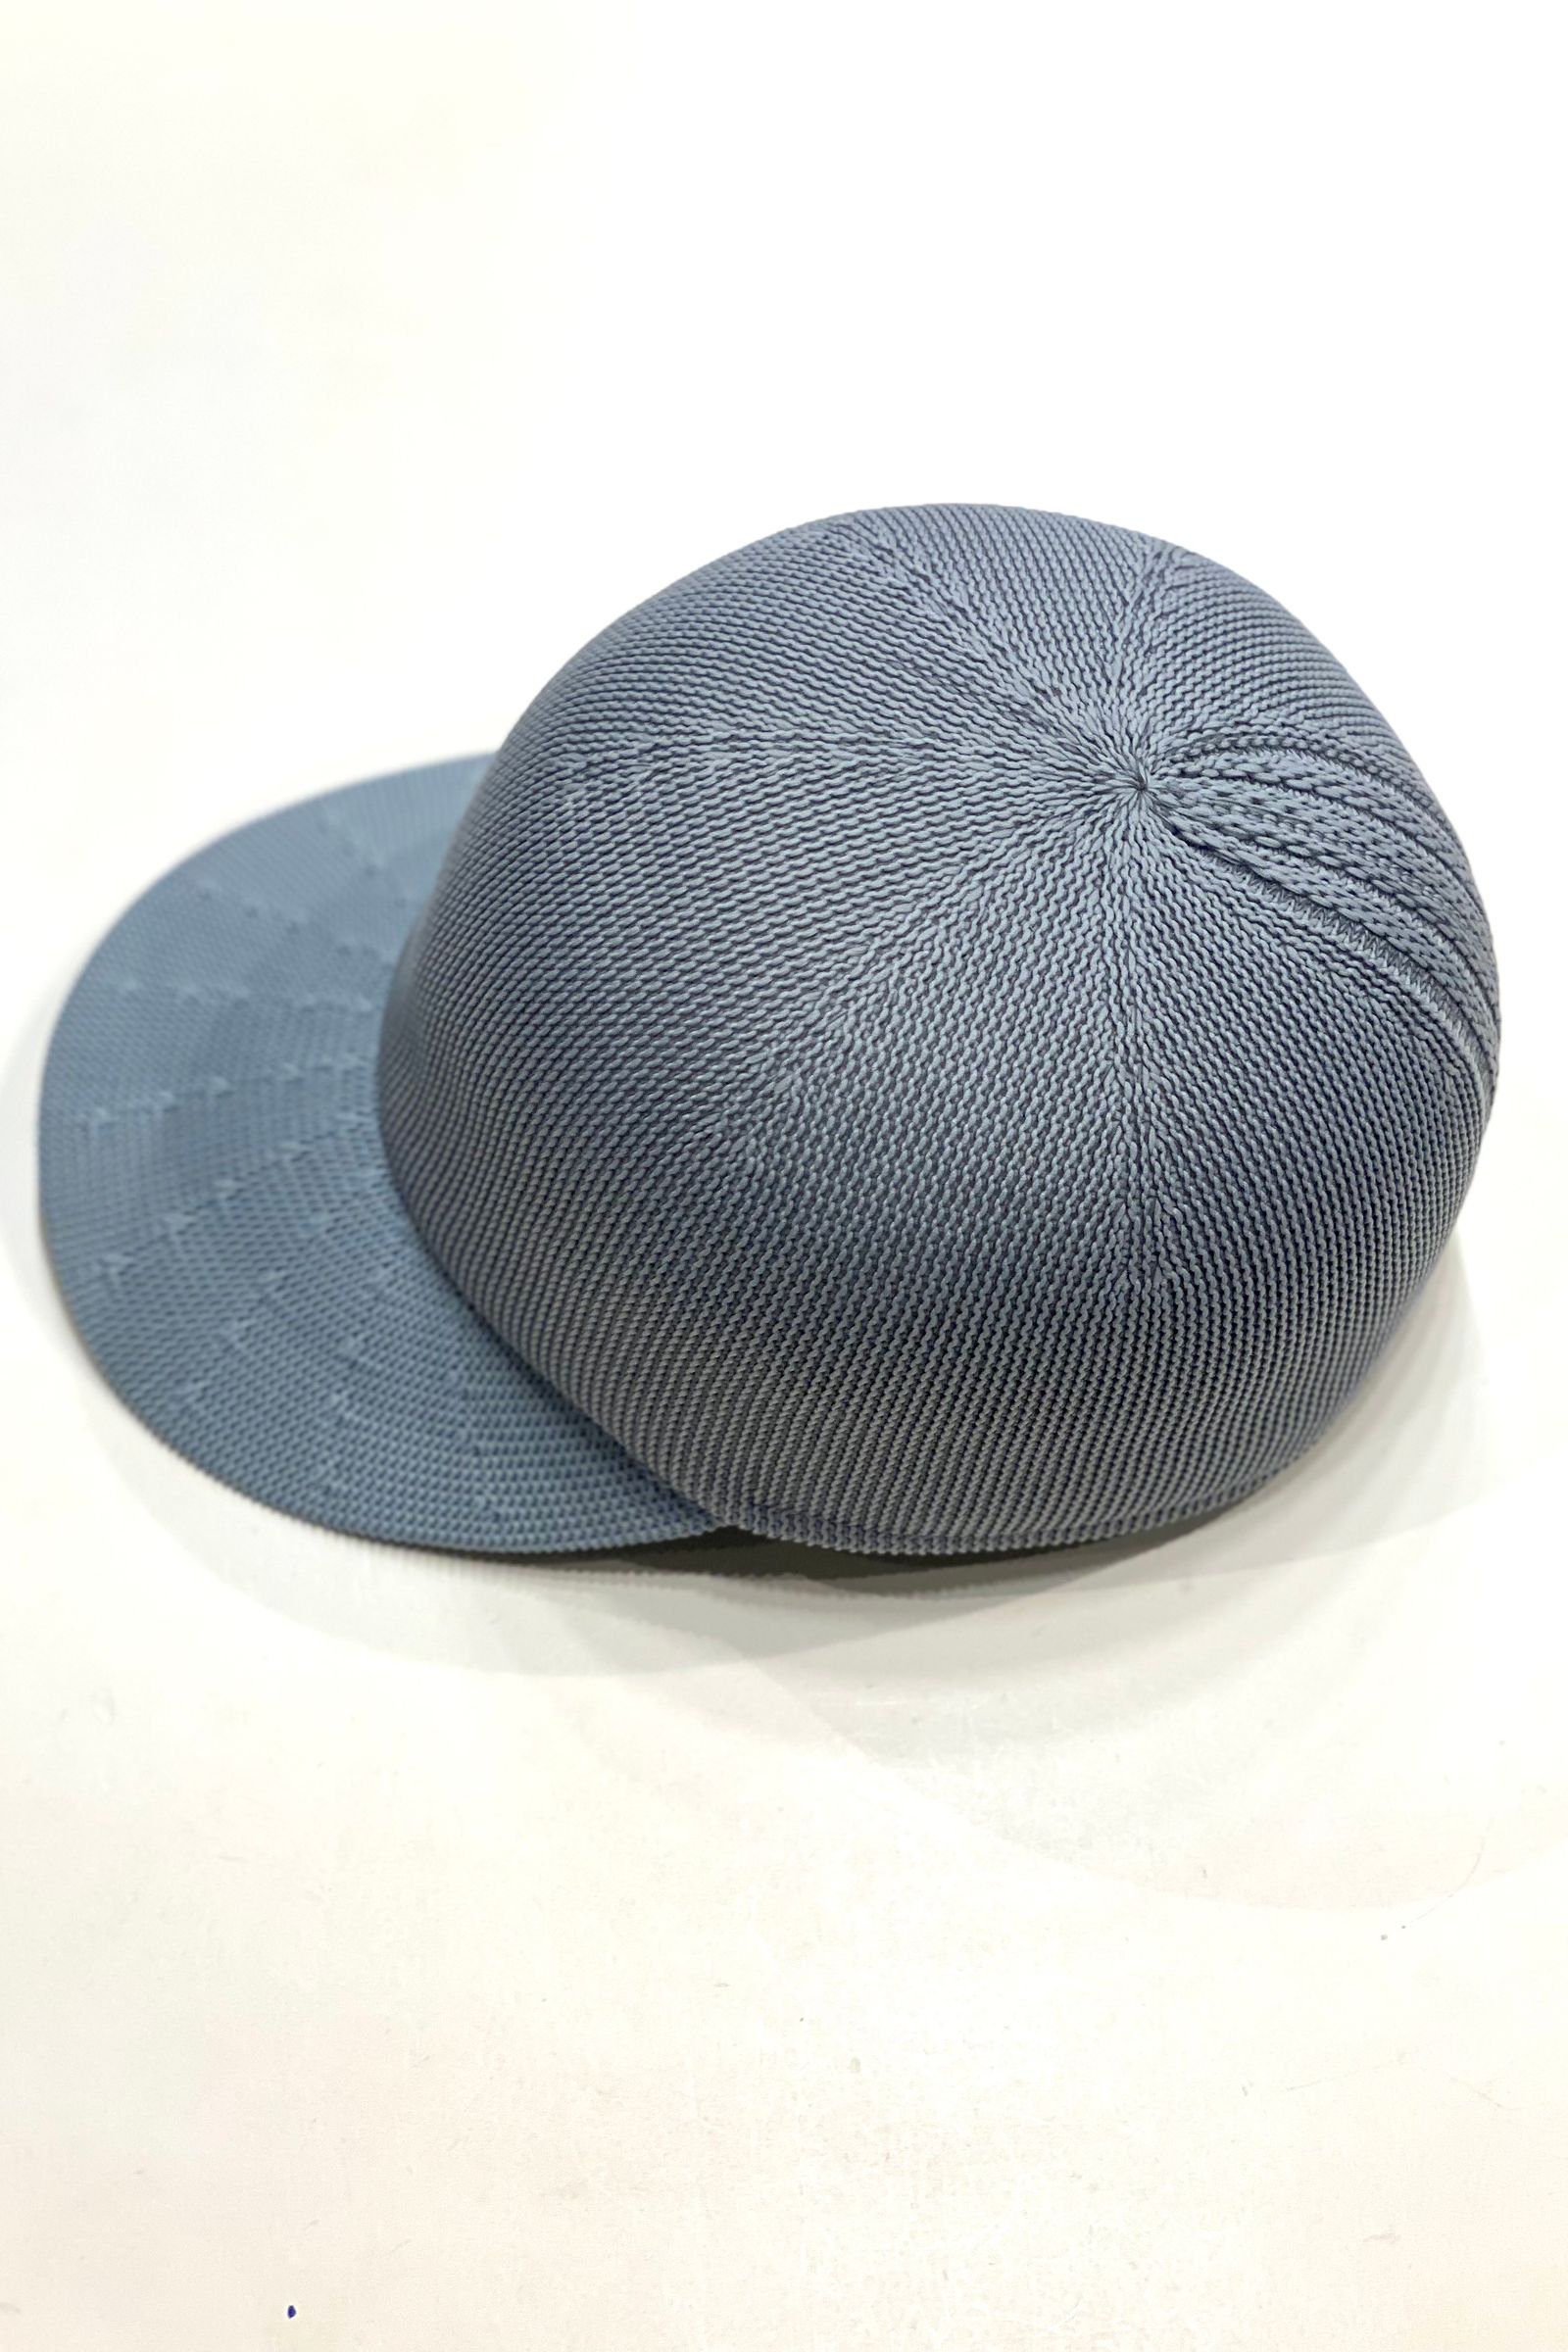 CFCL - mesh knit cap 1 -light blue-unisex | asterisk